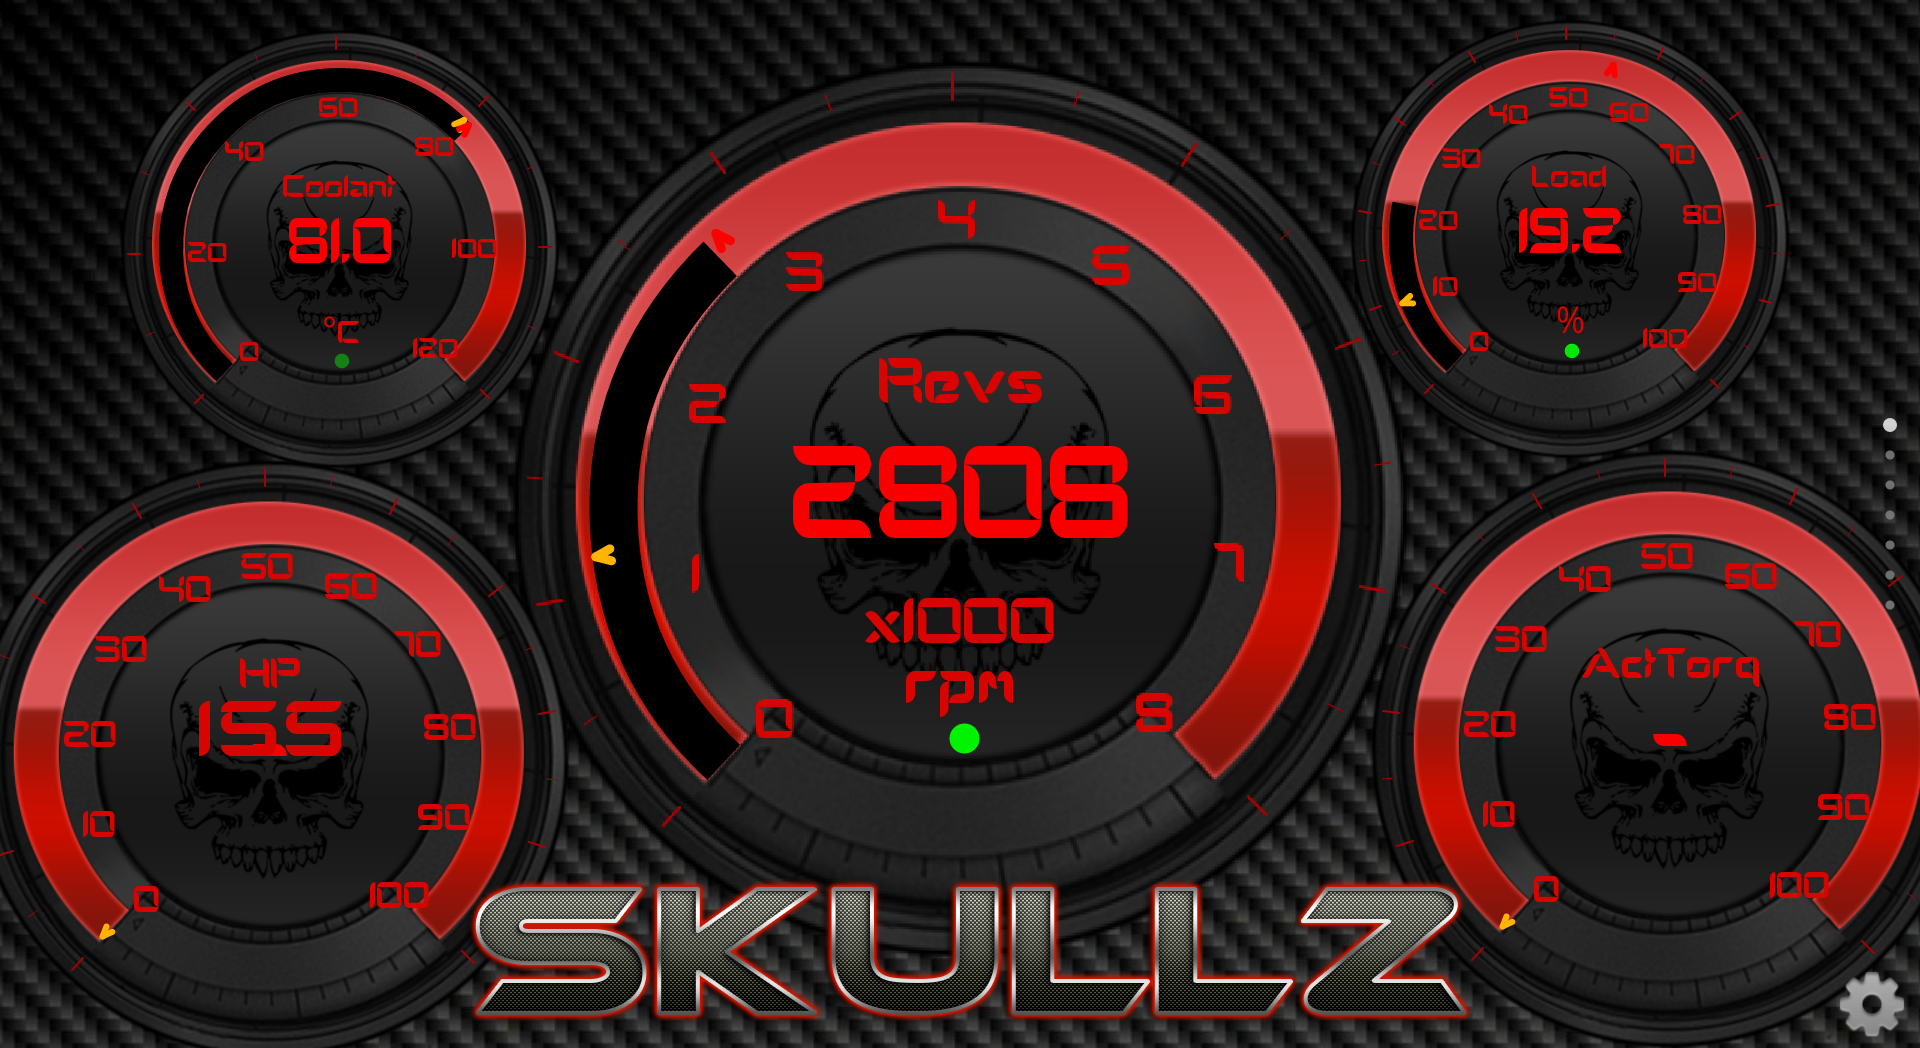 Android application SkullZ Torque Theme OBD 2 screenshort